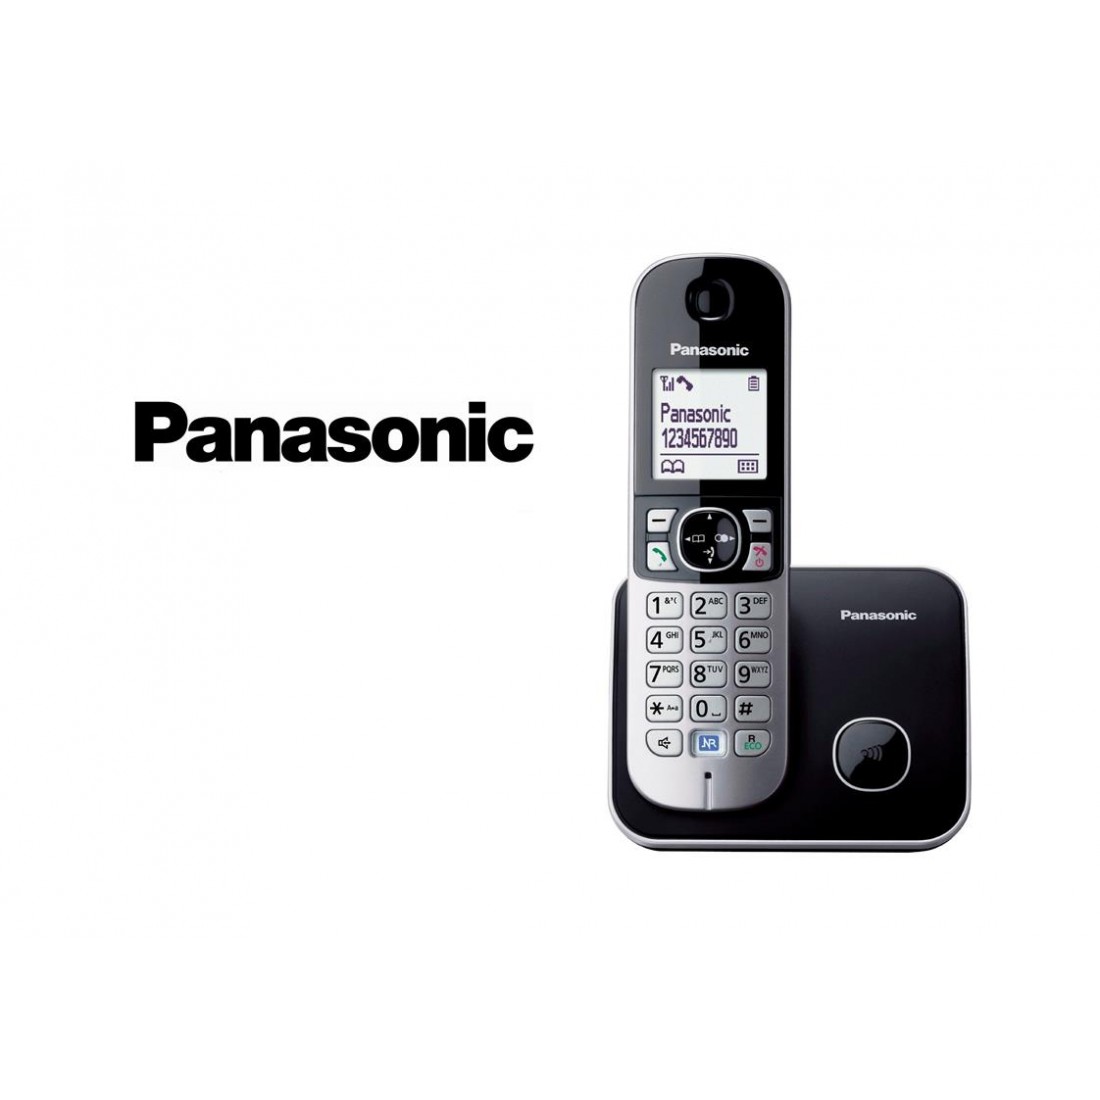 Panasonic kx tg6811rub. DECT Panasonic KX-tg6811. Радиотелефон Panasonic KX-tg6811rub. Радиотелефон Panasonic 2 трубки. Радиотелефон Panasonic KX-TG.